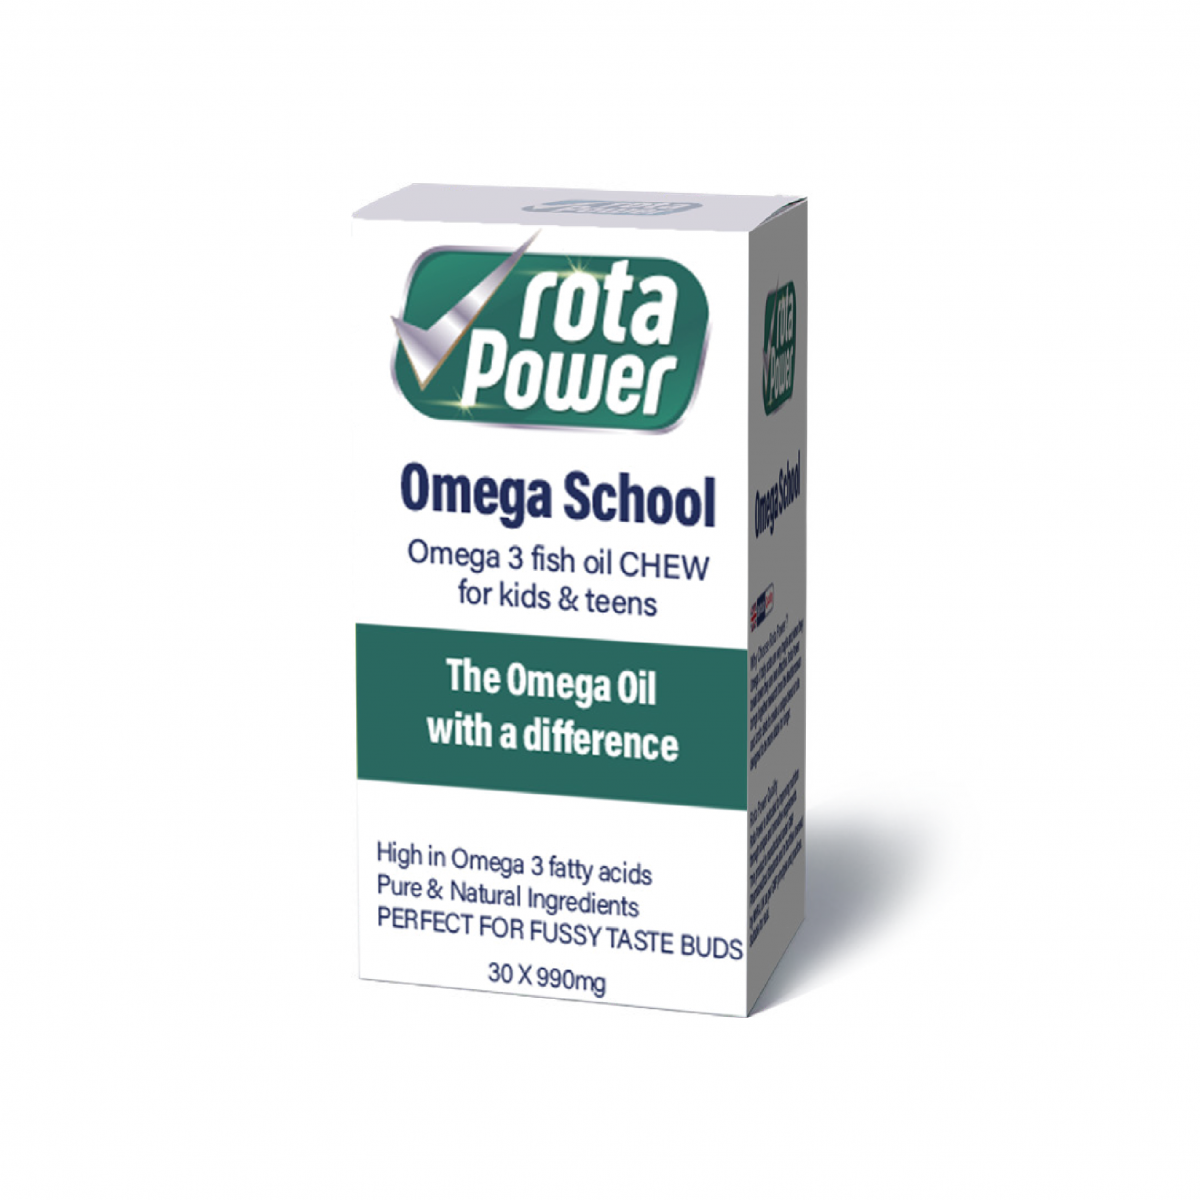 rota power omega school